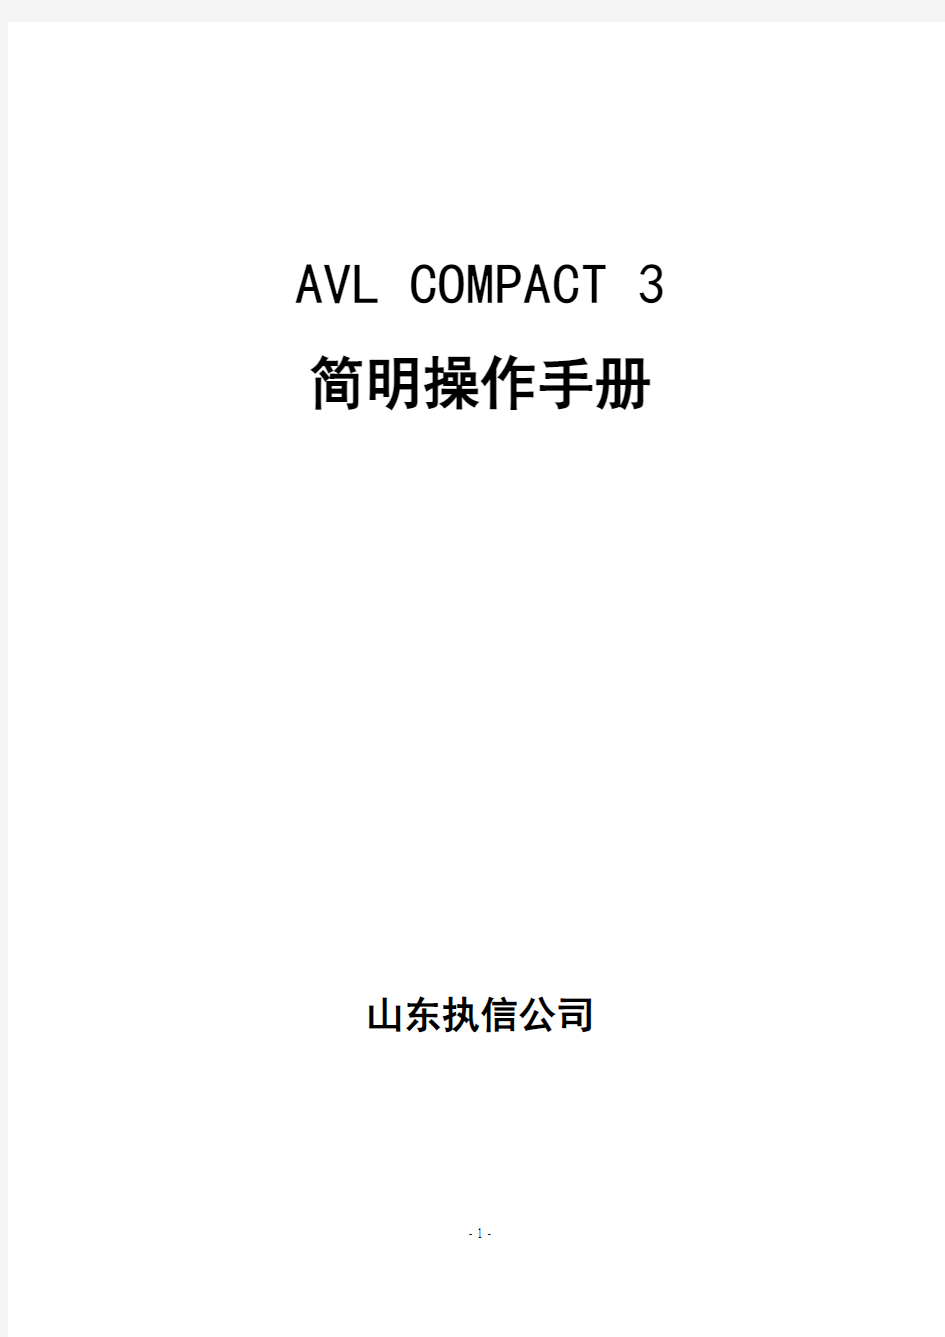 Compact3简明操作手册